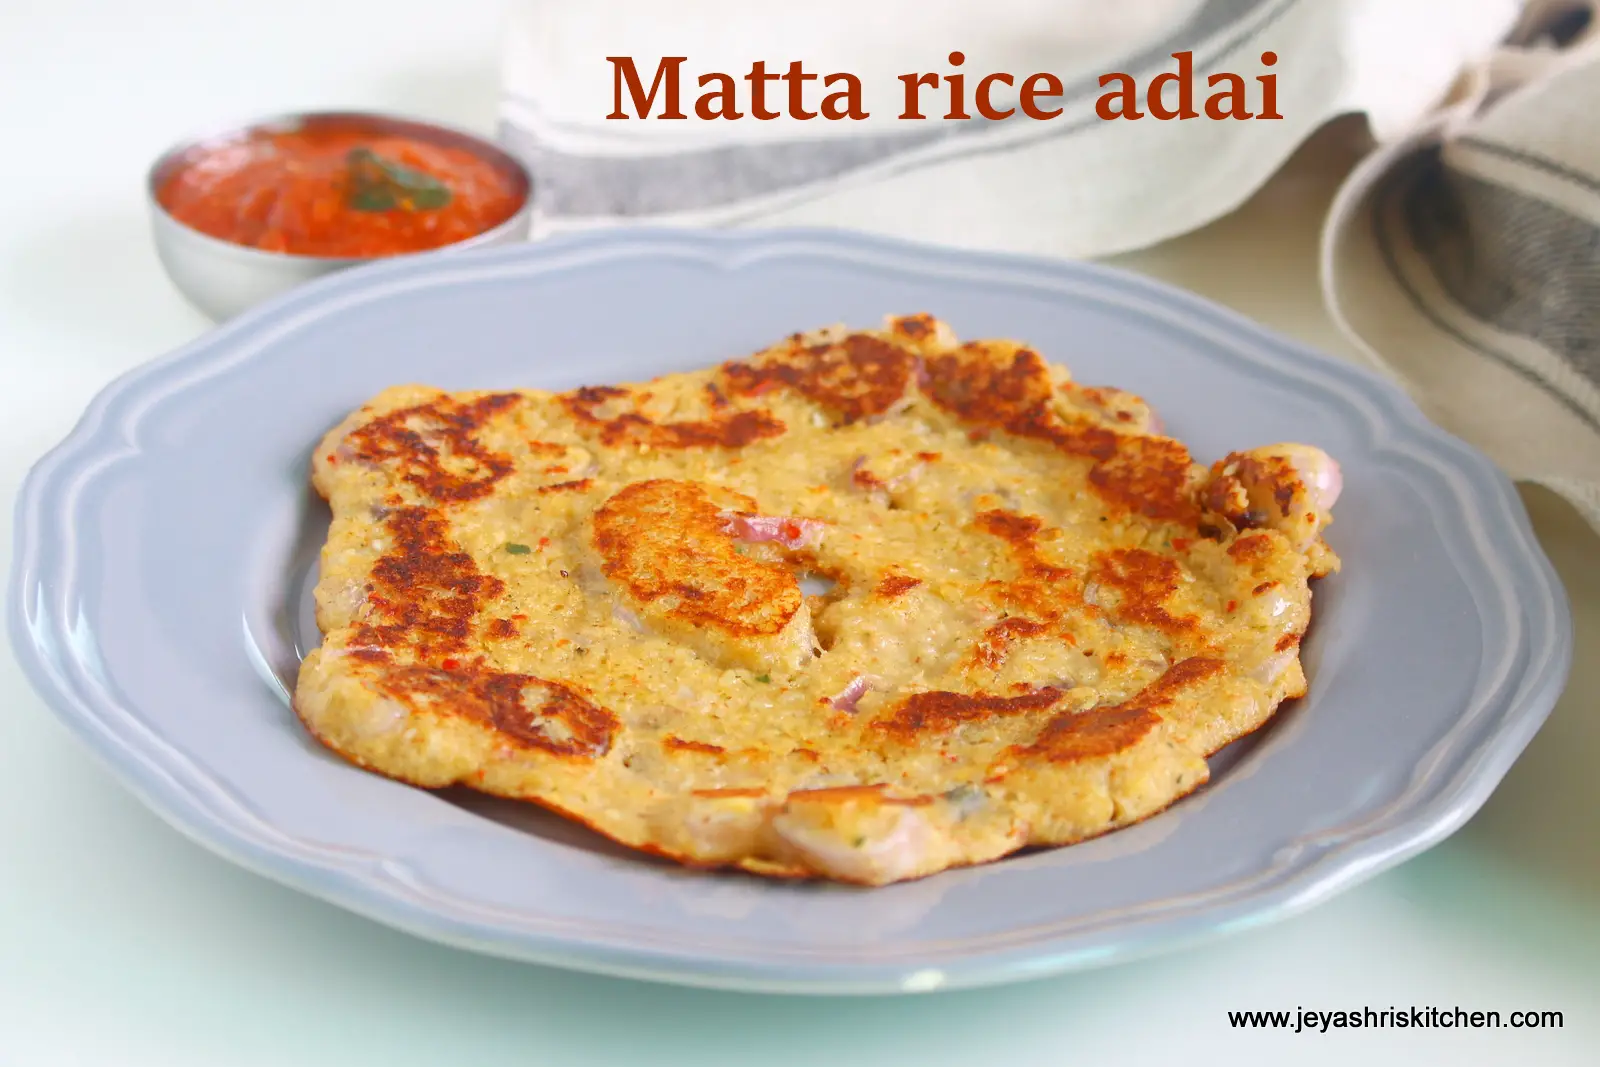 Adai dosai recipe using Kerala Matta rice- Popular South Indian Tiffin